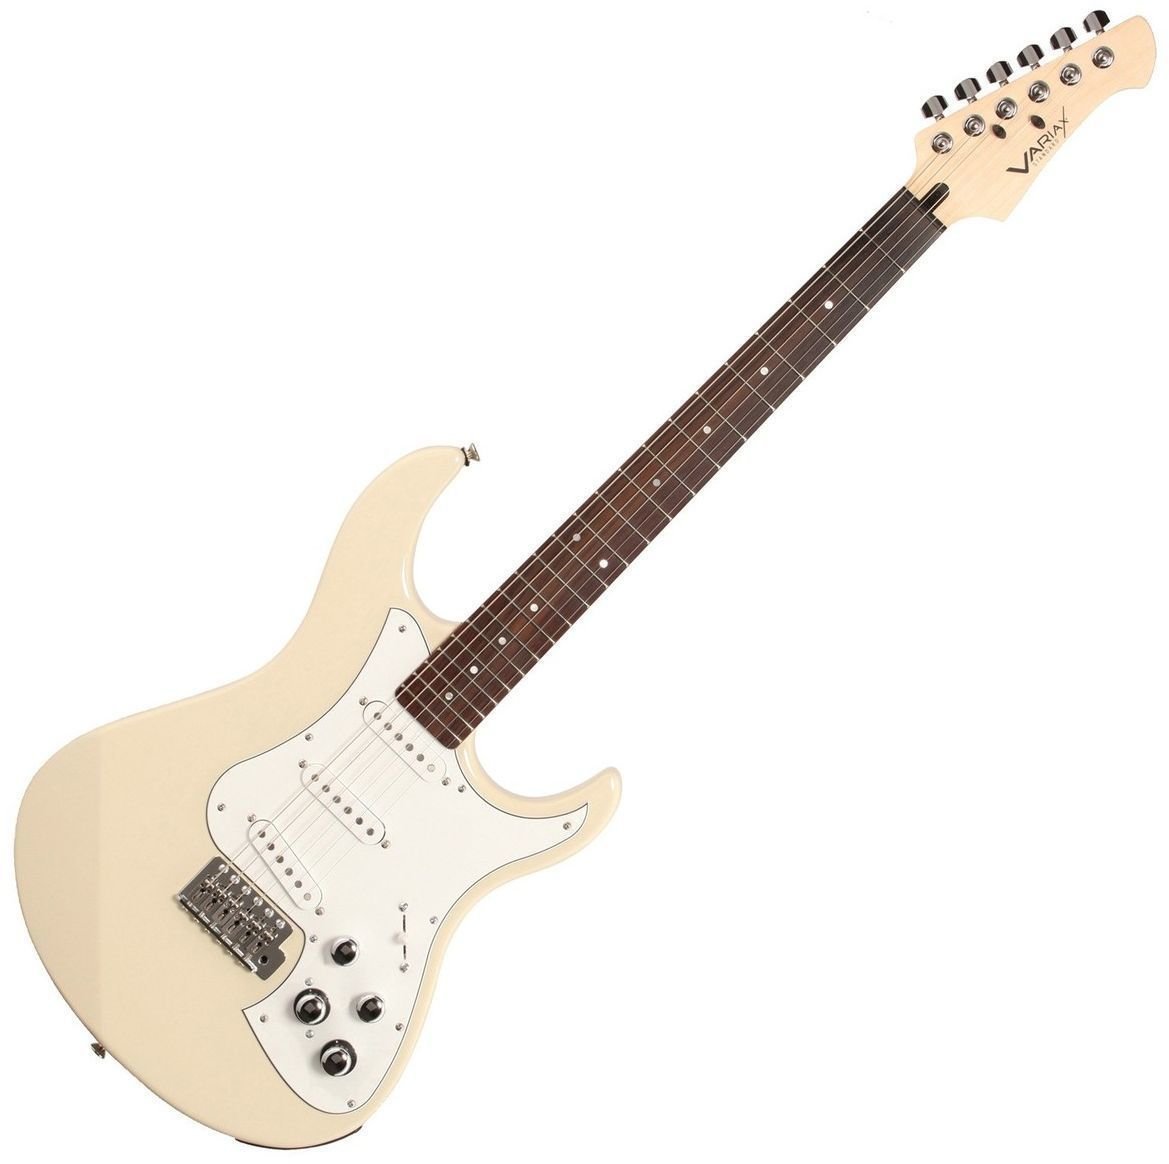 Gitara elektryczna Line6 Variax Standard White